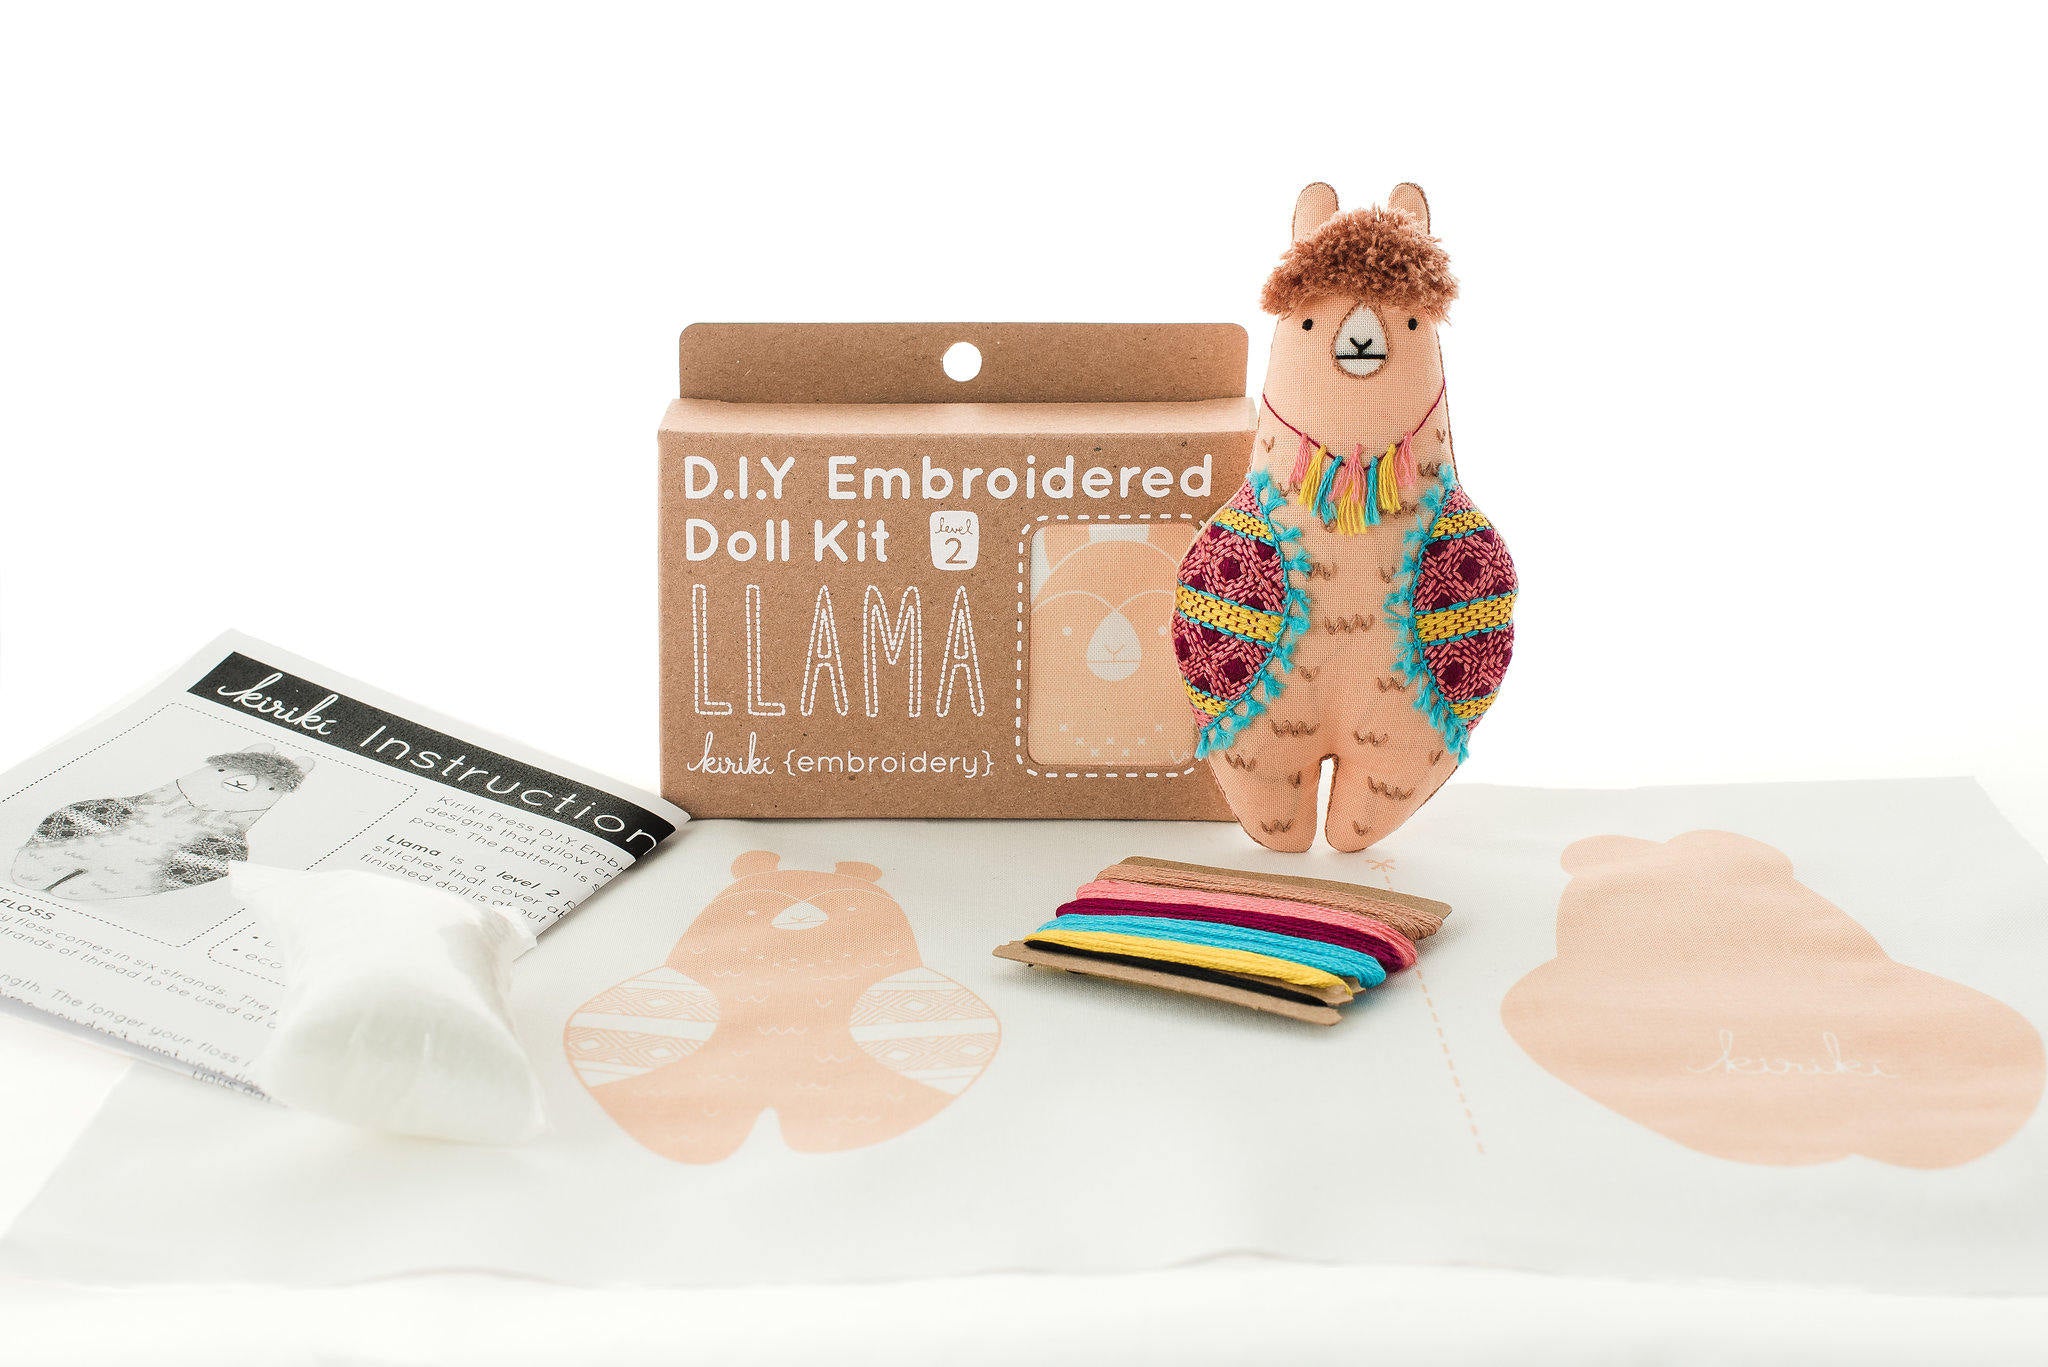 Llama 4-inch embroidery kit